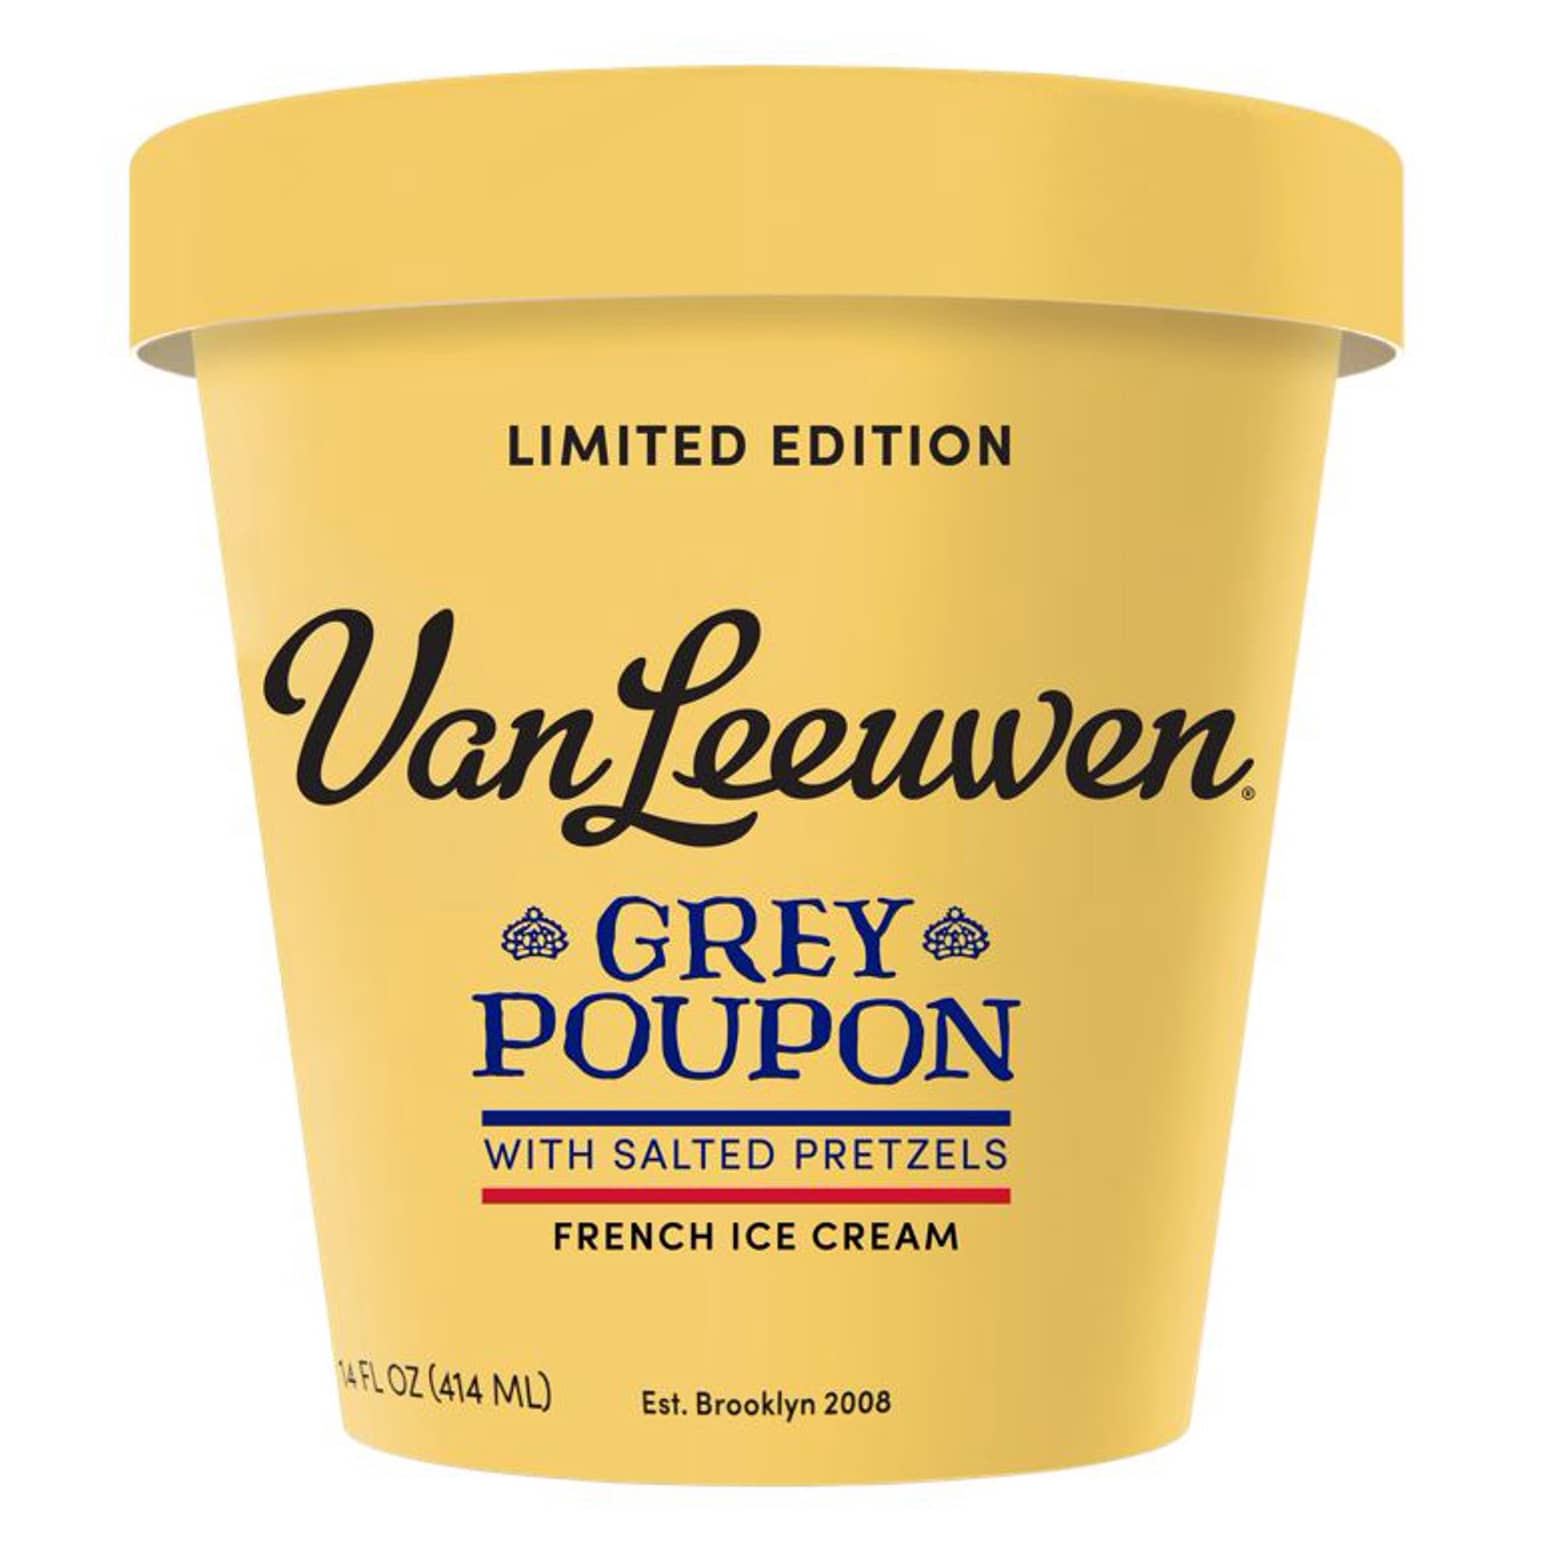 Van Leeuwen Grey Poupon Dijon Mustard Ice Cream